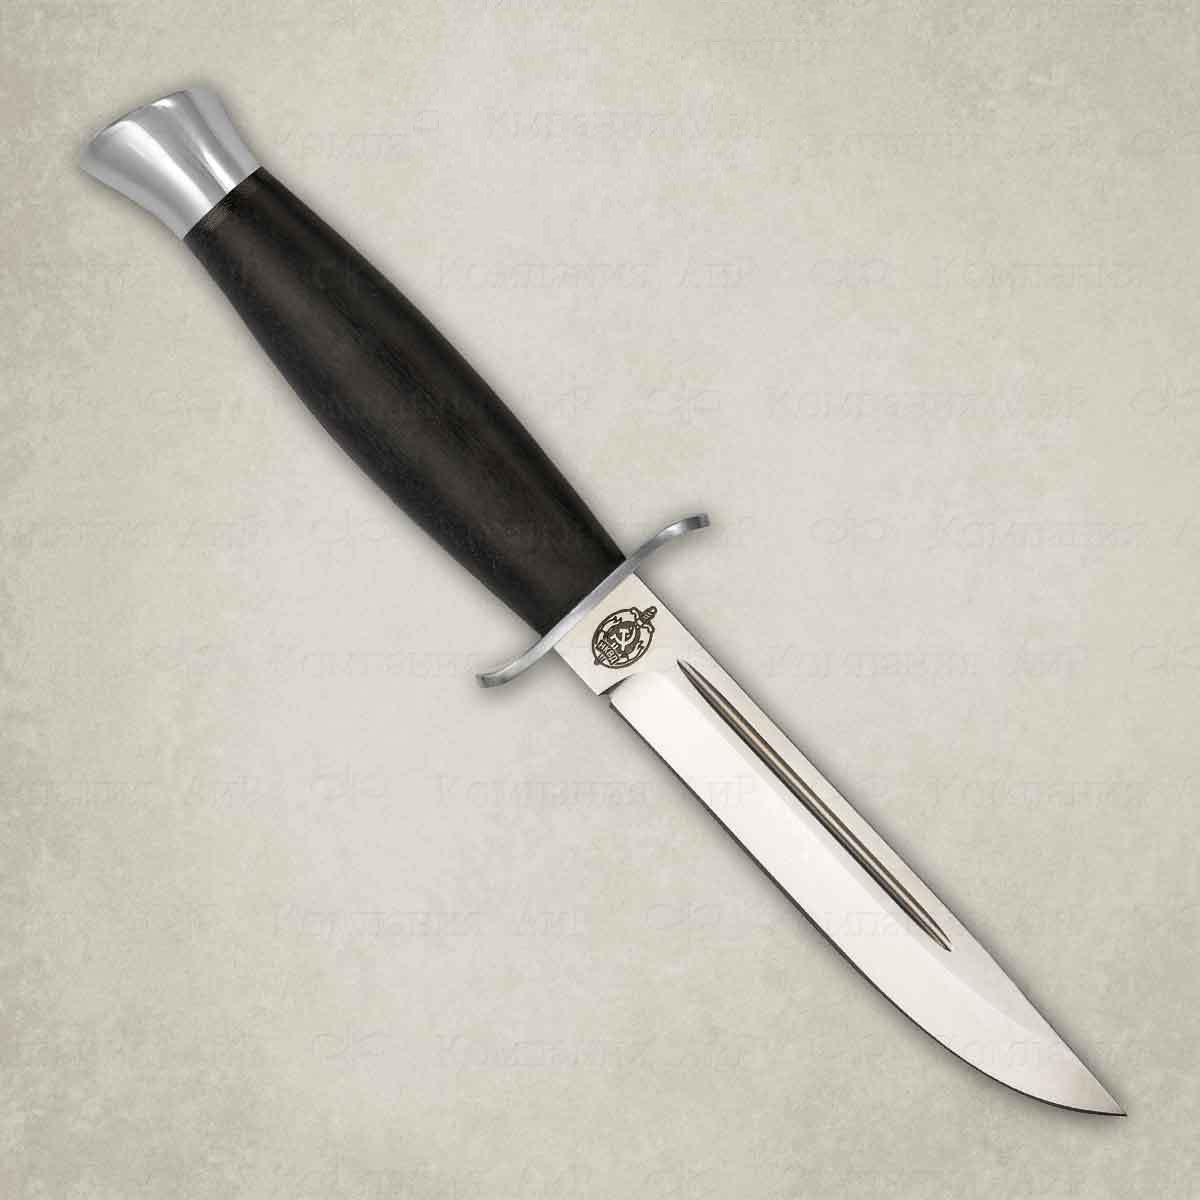 Нож АиР Финка-2, сталь  ЭП-766, рукоять граб